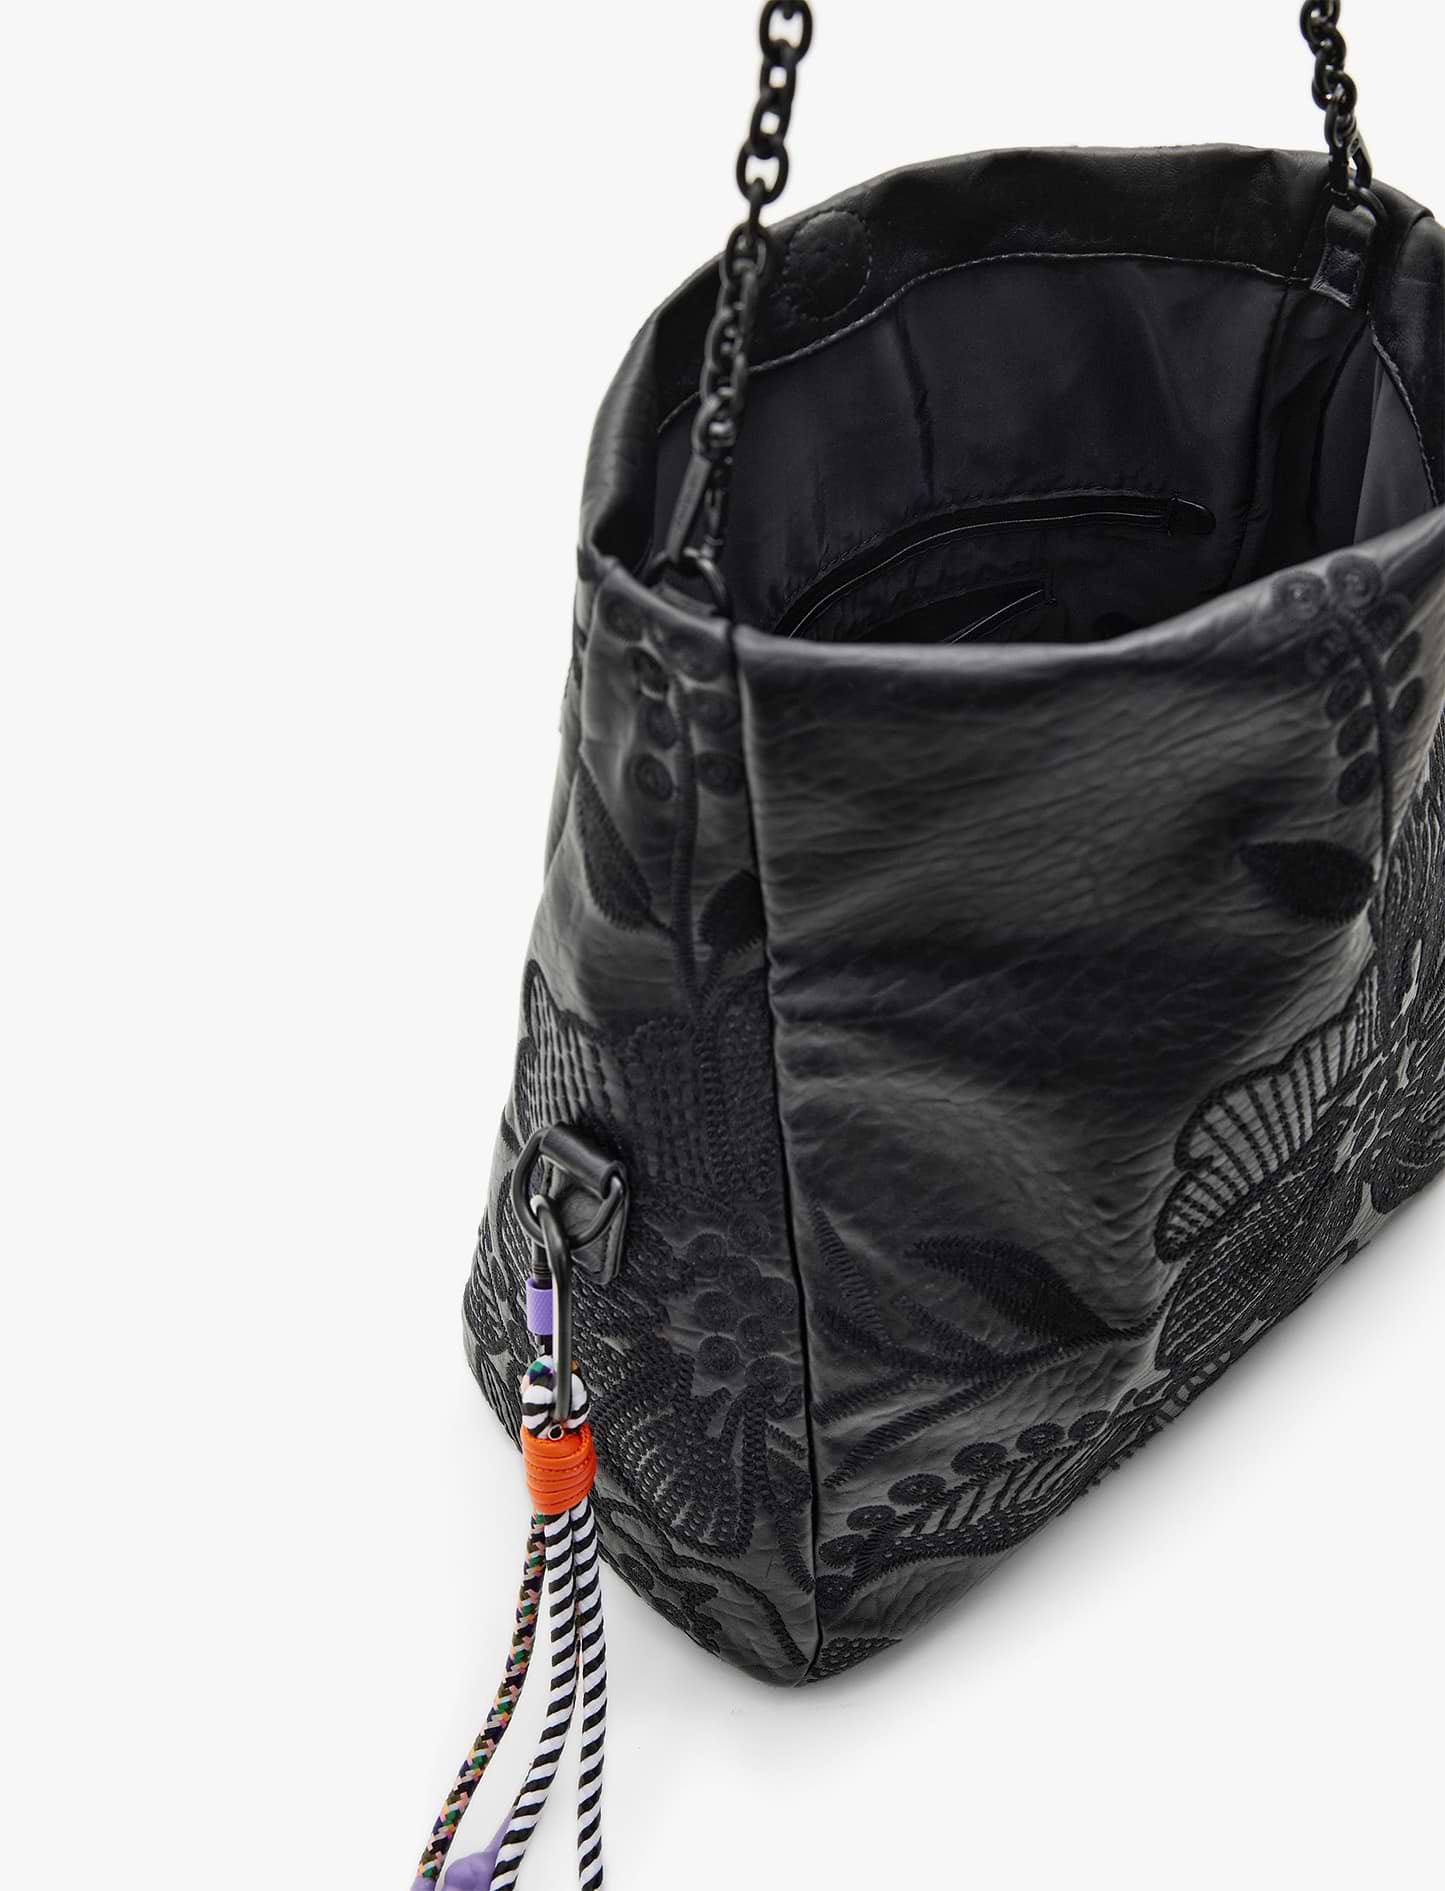 Desigual Bag Alpha Loverty 3.0 - תיק גב בצבע שחור